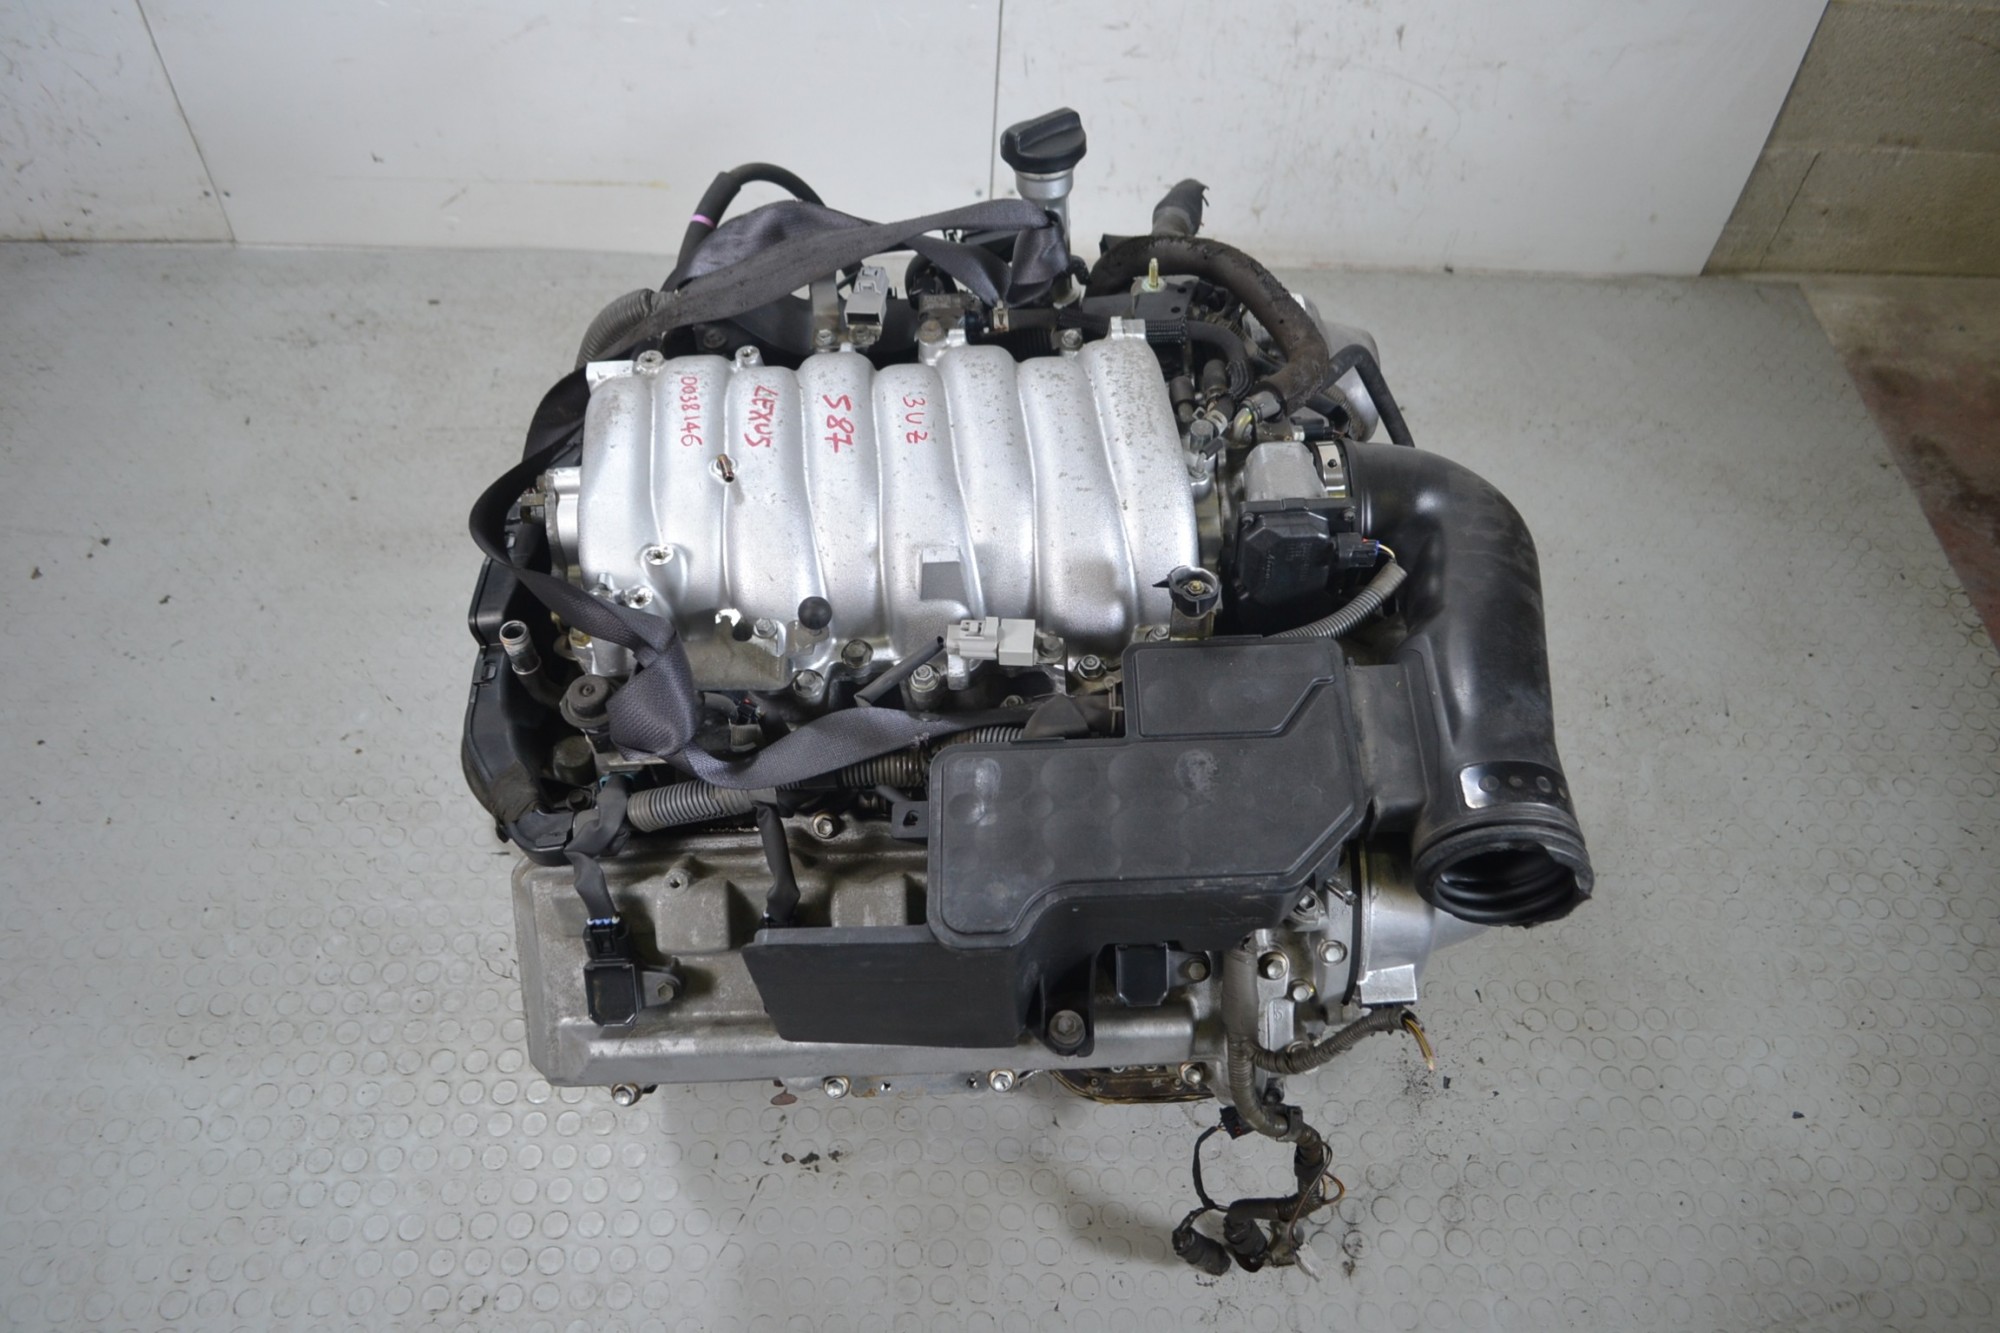 Motore V8 Lexus Cod 3UZ 4.3L n serie 0038146  1667579500455